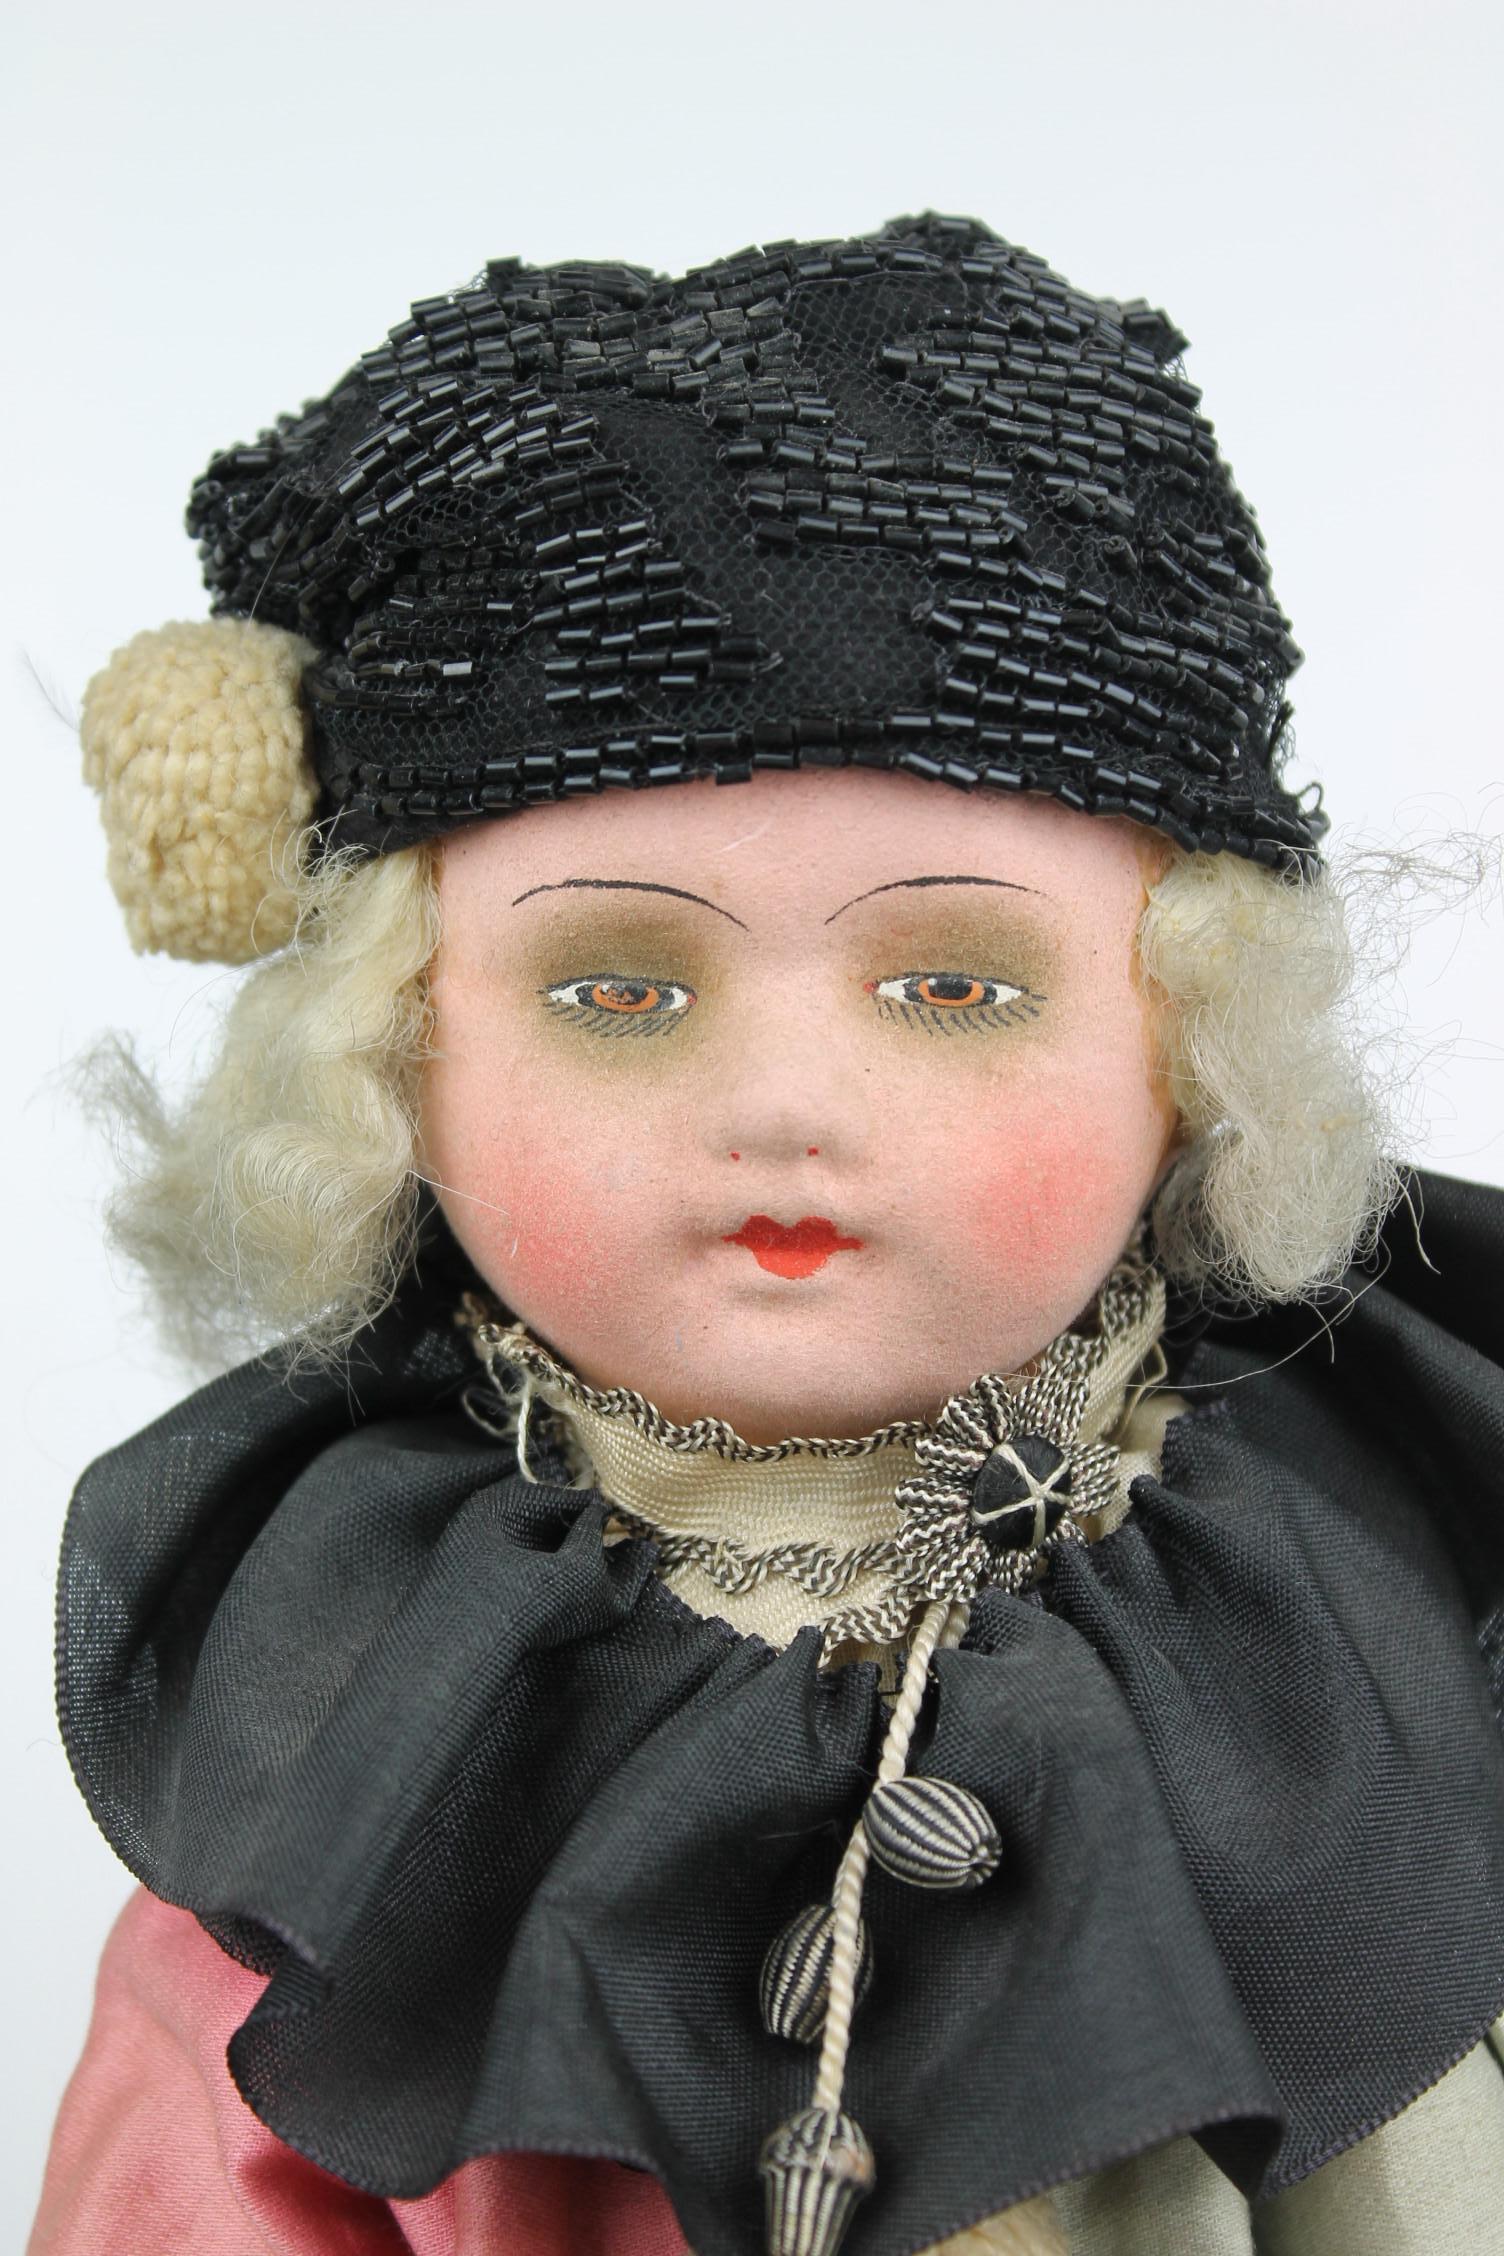 antique dolls 1800s-1920s